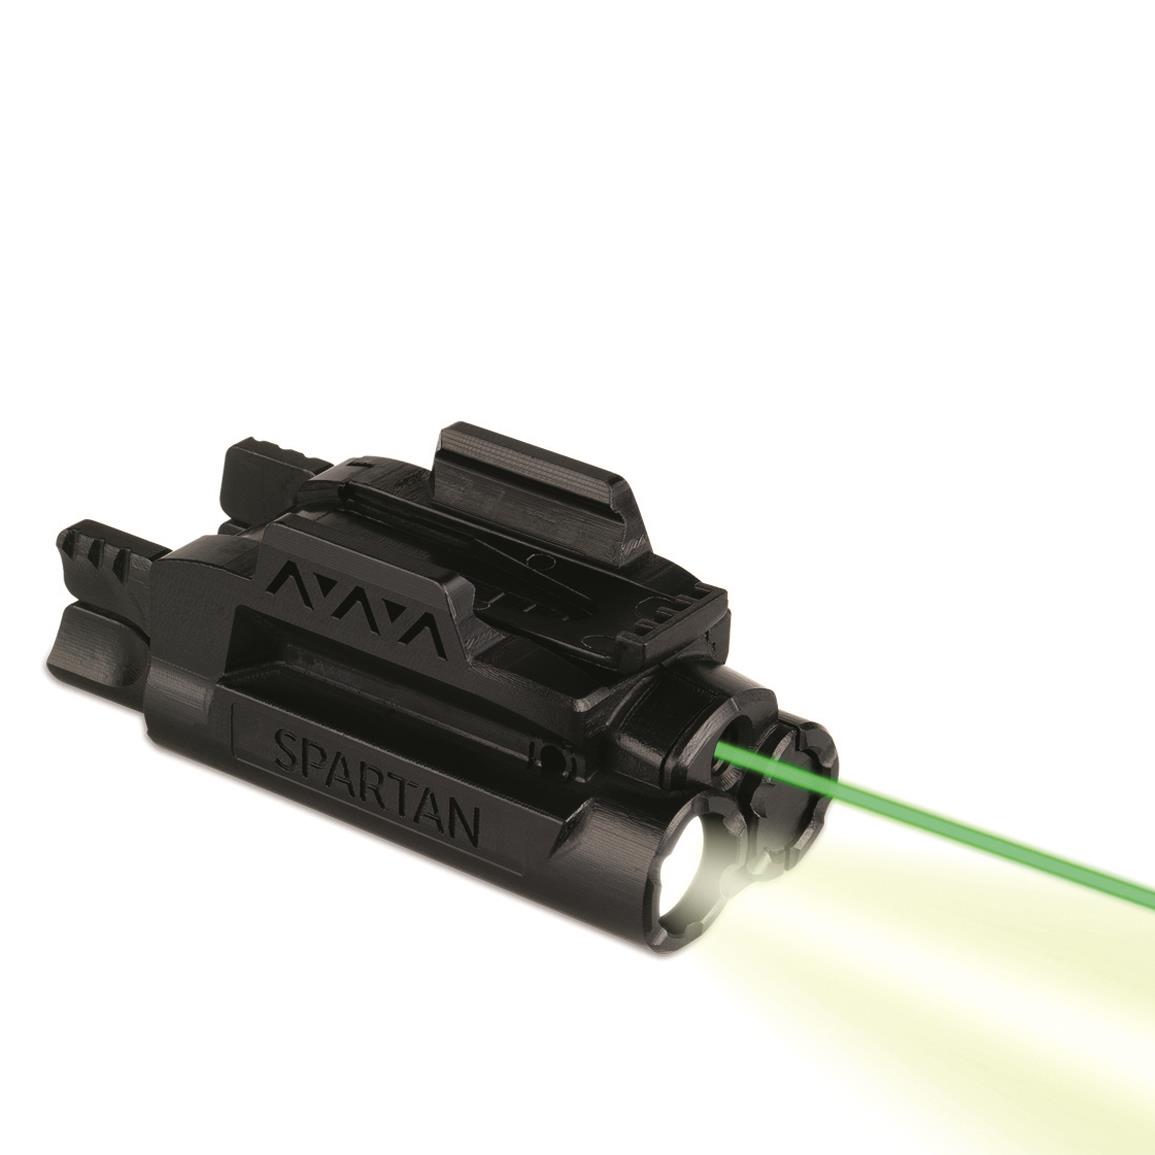 Lasermax Spartan Adjustable Fit Green Laser and LED Light